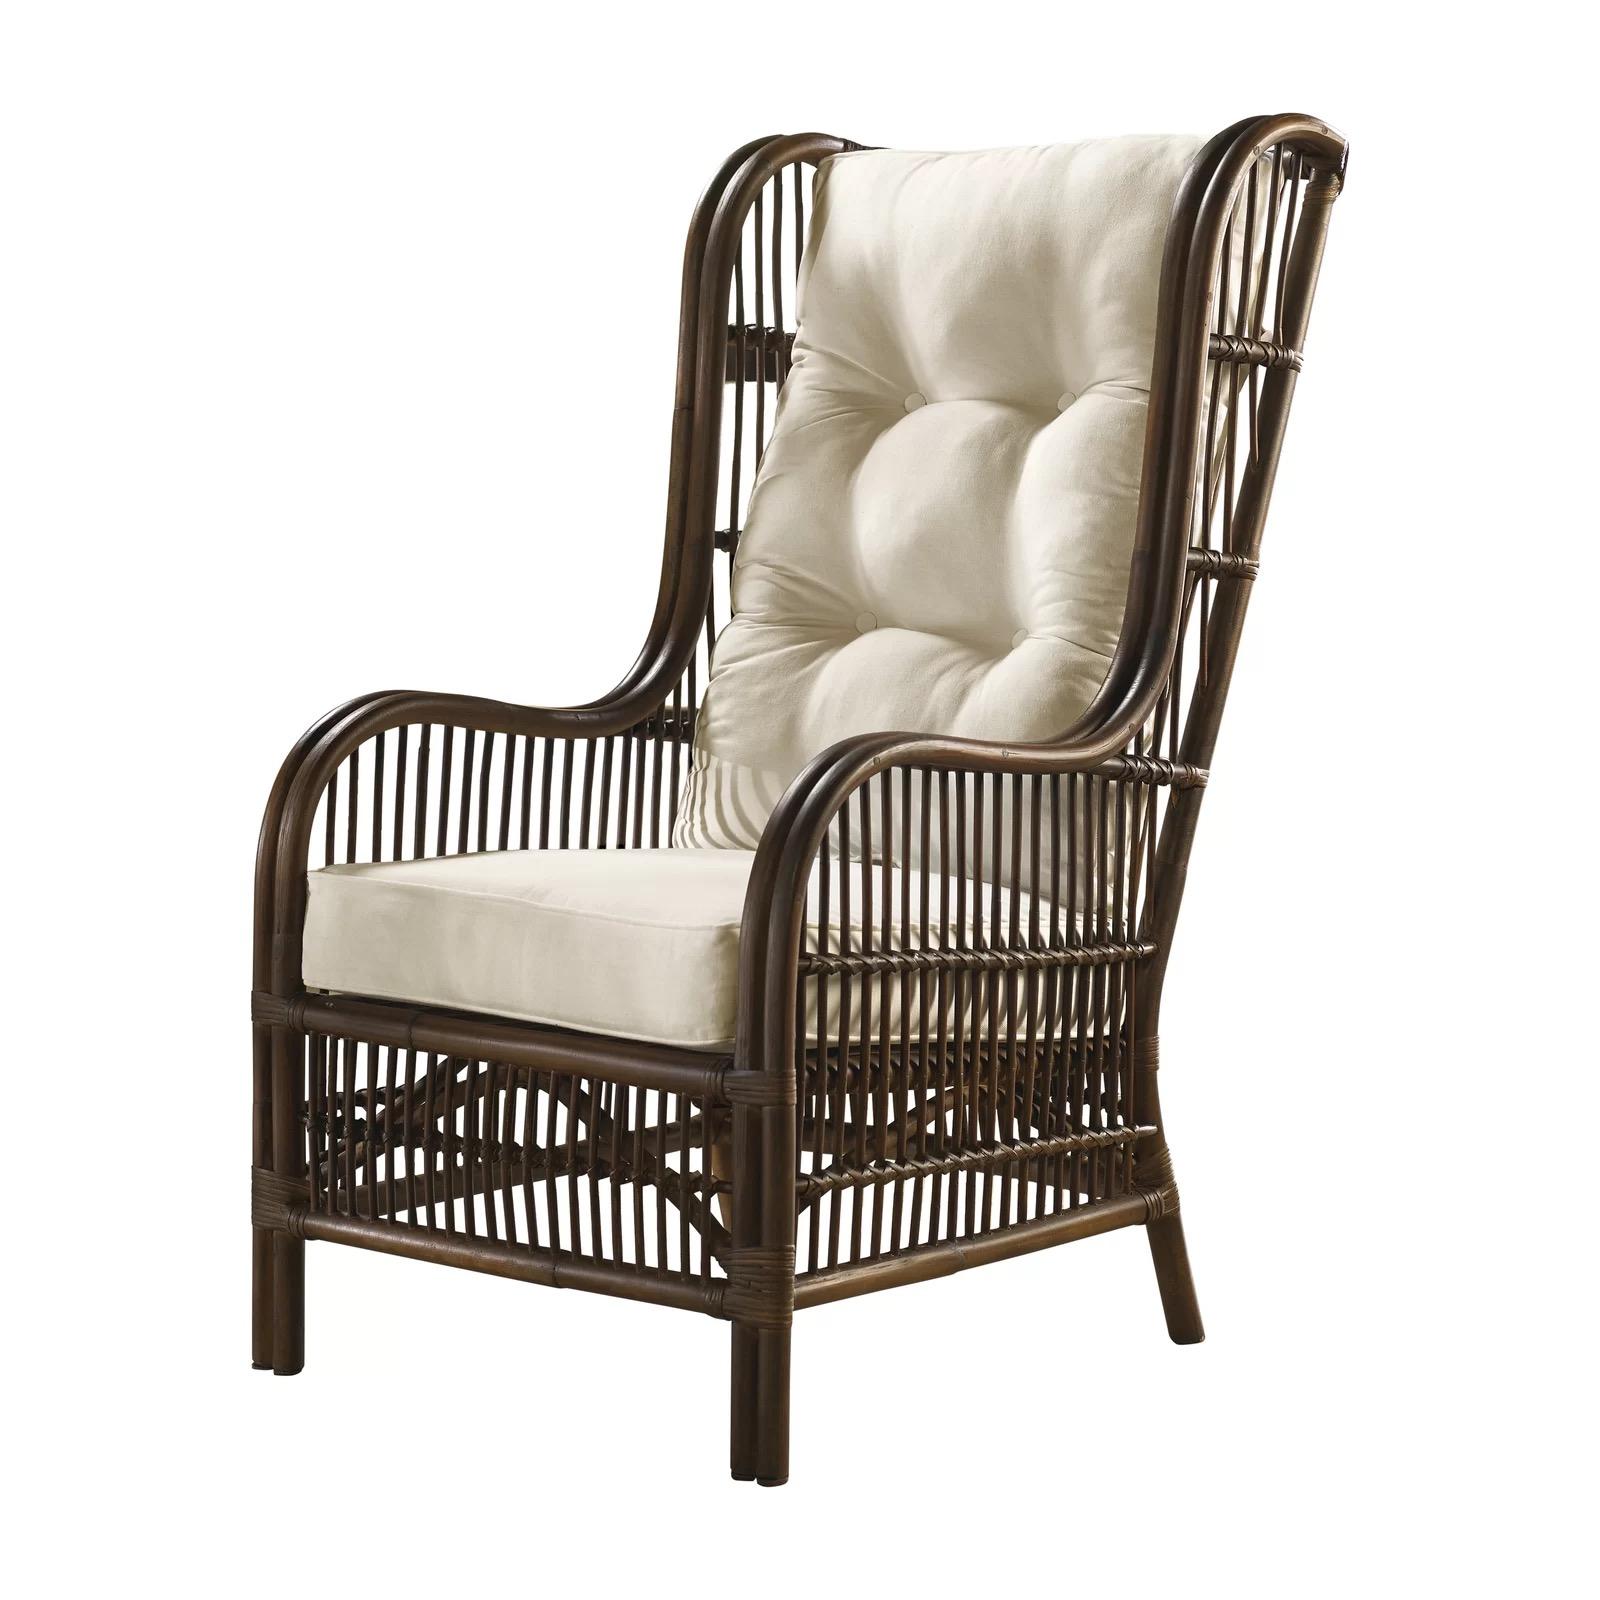 Classic Outdoor Chair Bora Bora PJS-2001-ATQ-OC in Brown, Beige Fabric